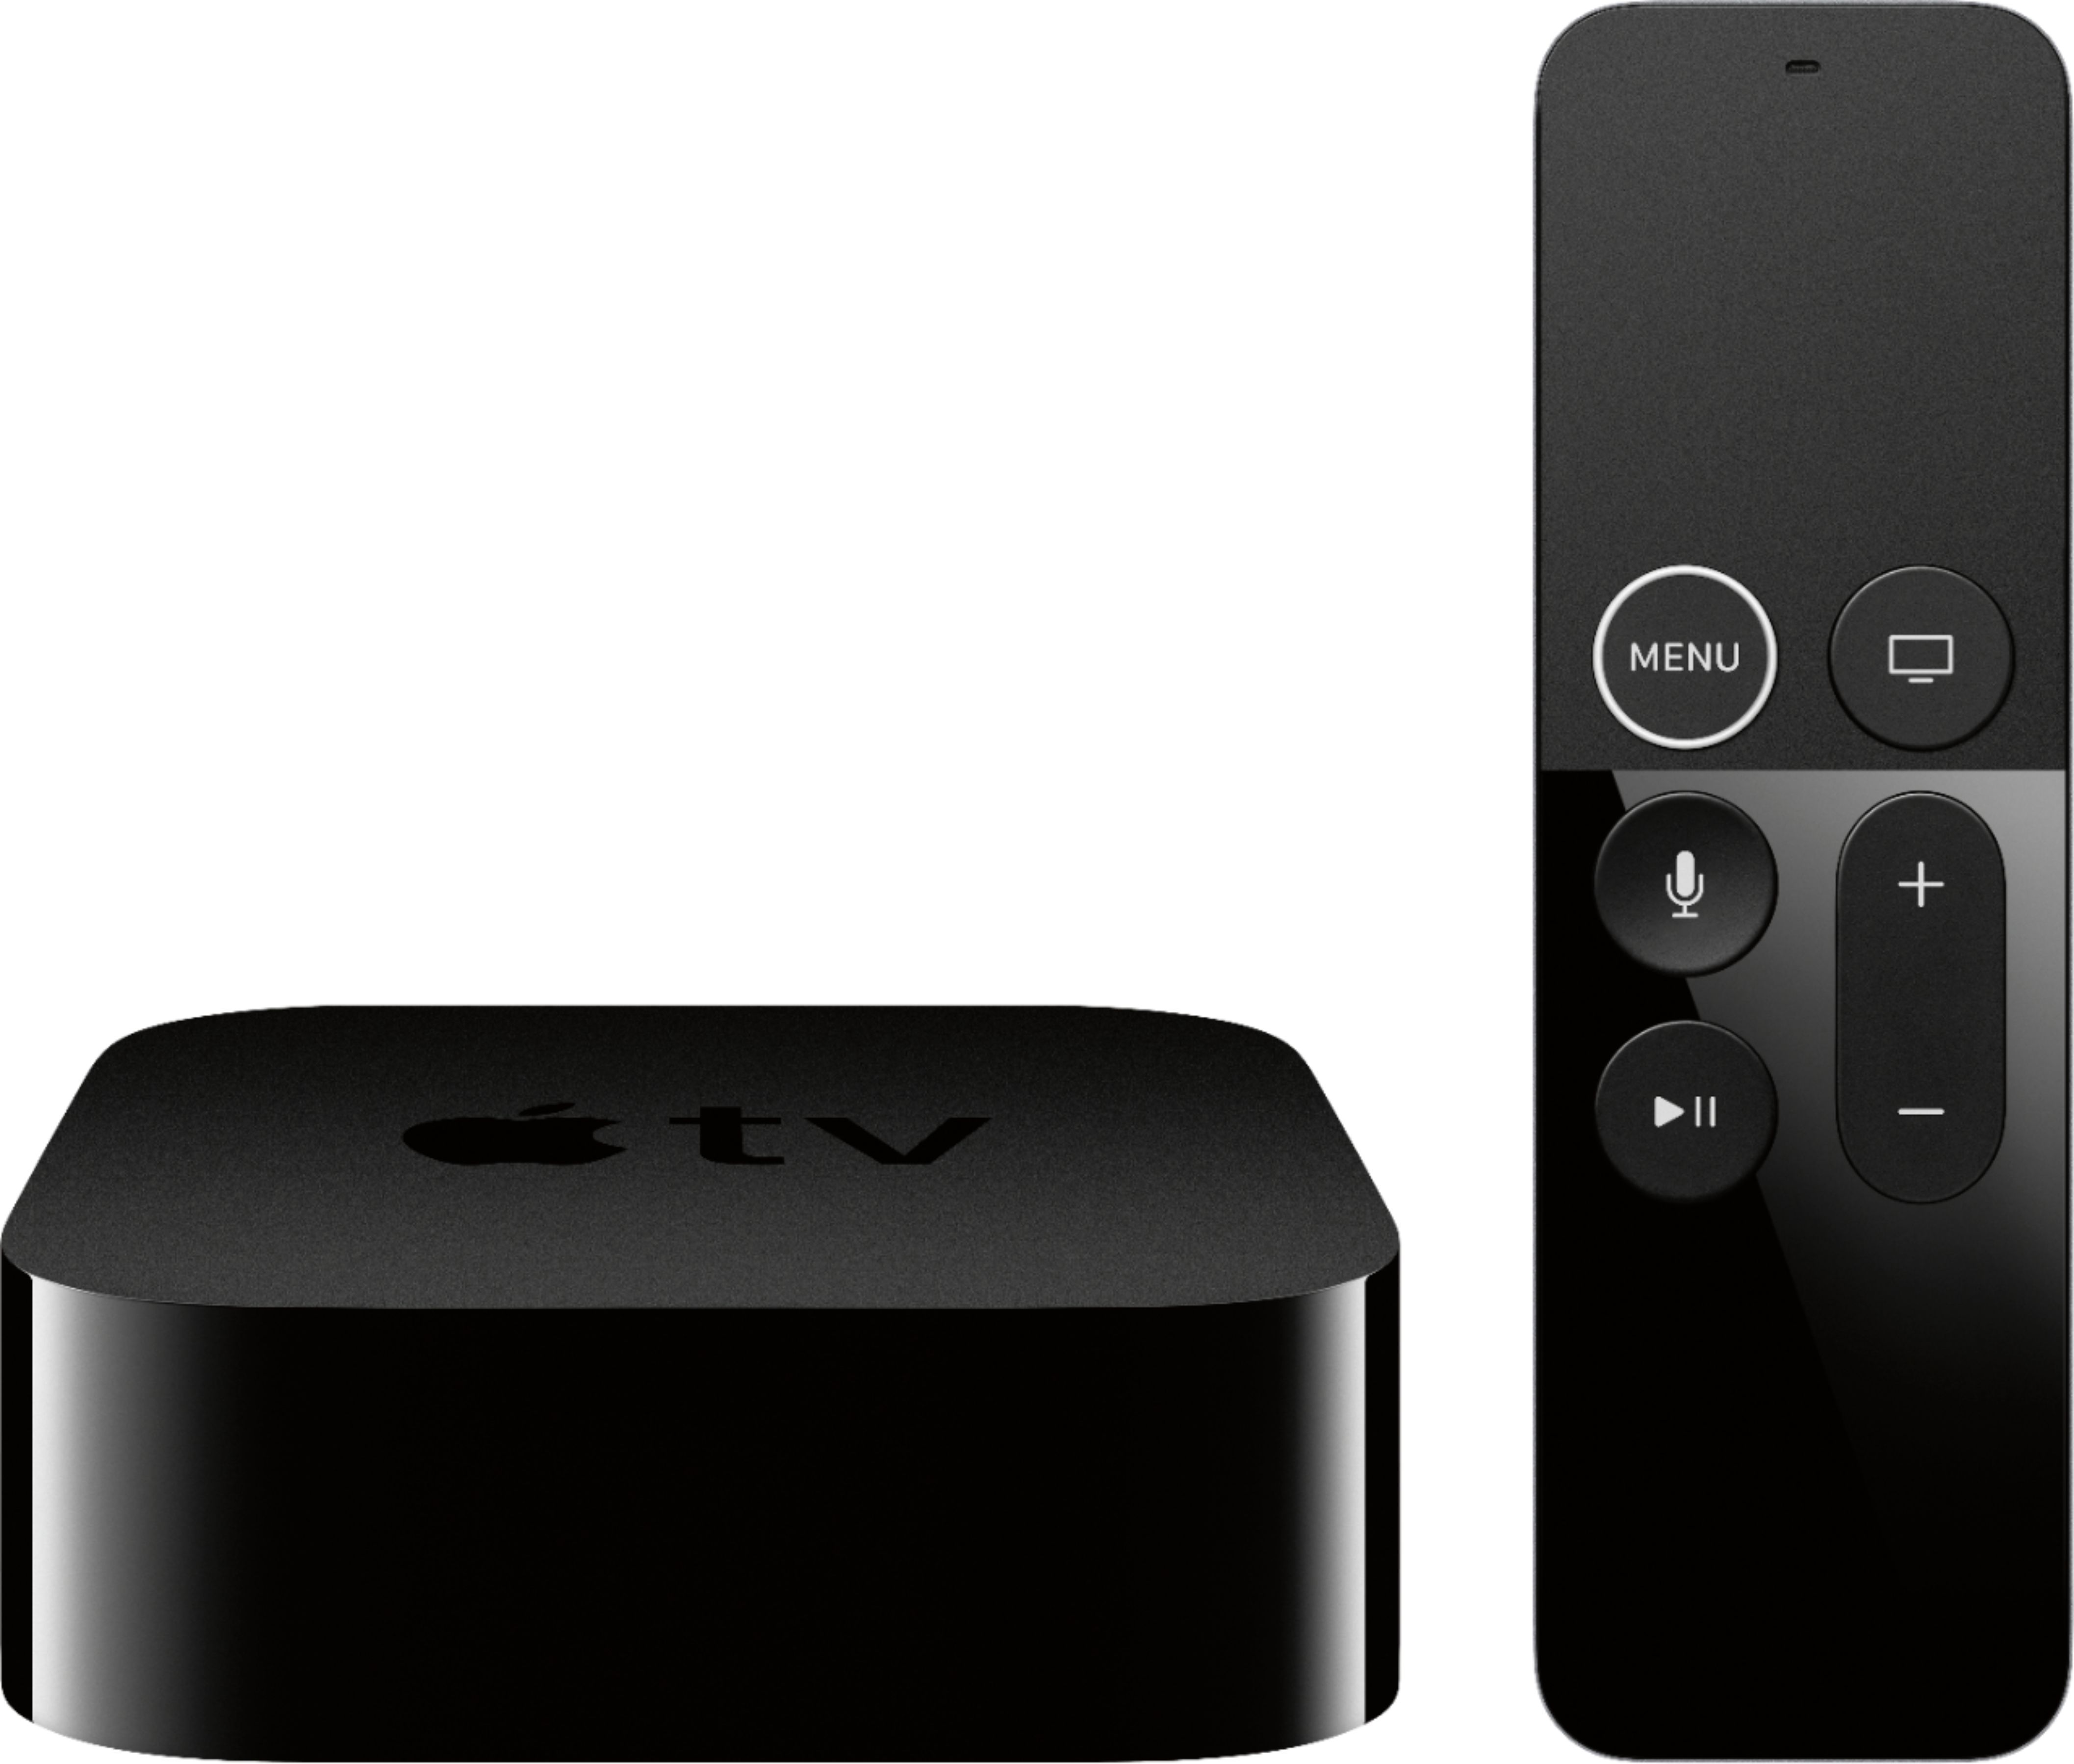 Apple TV 4K 32GB Black MQD22LL/A - Best Buy | Best Buy U.S.